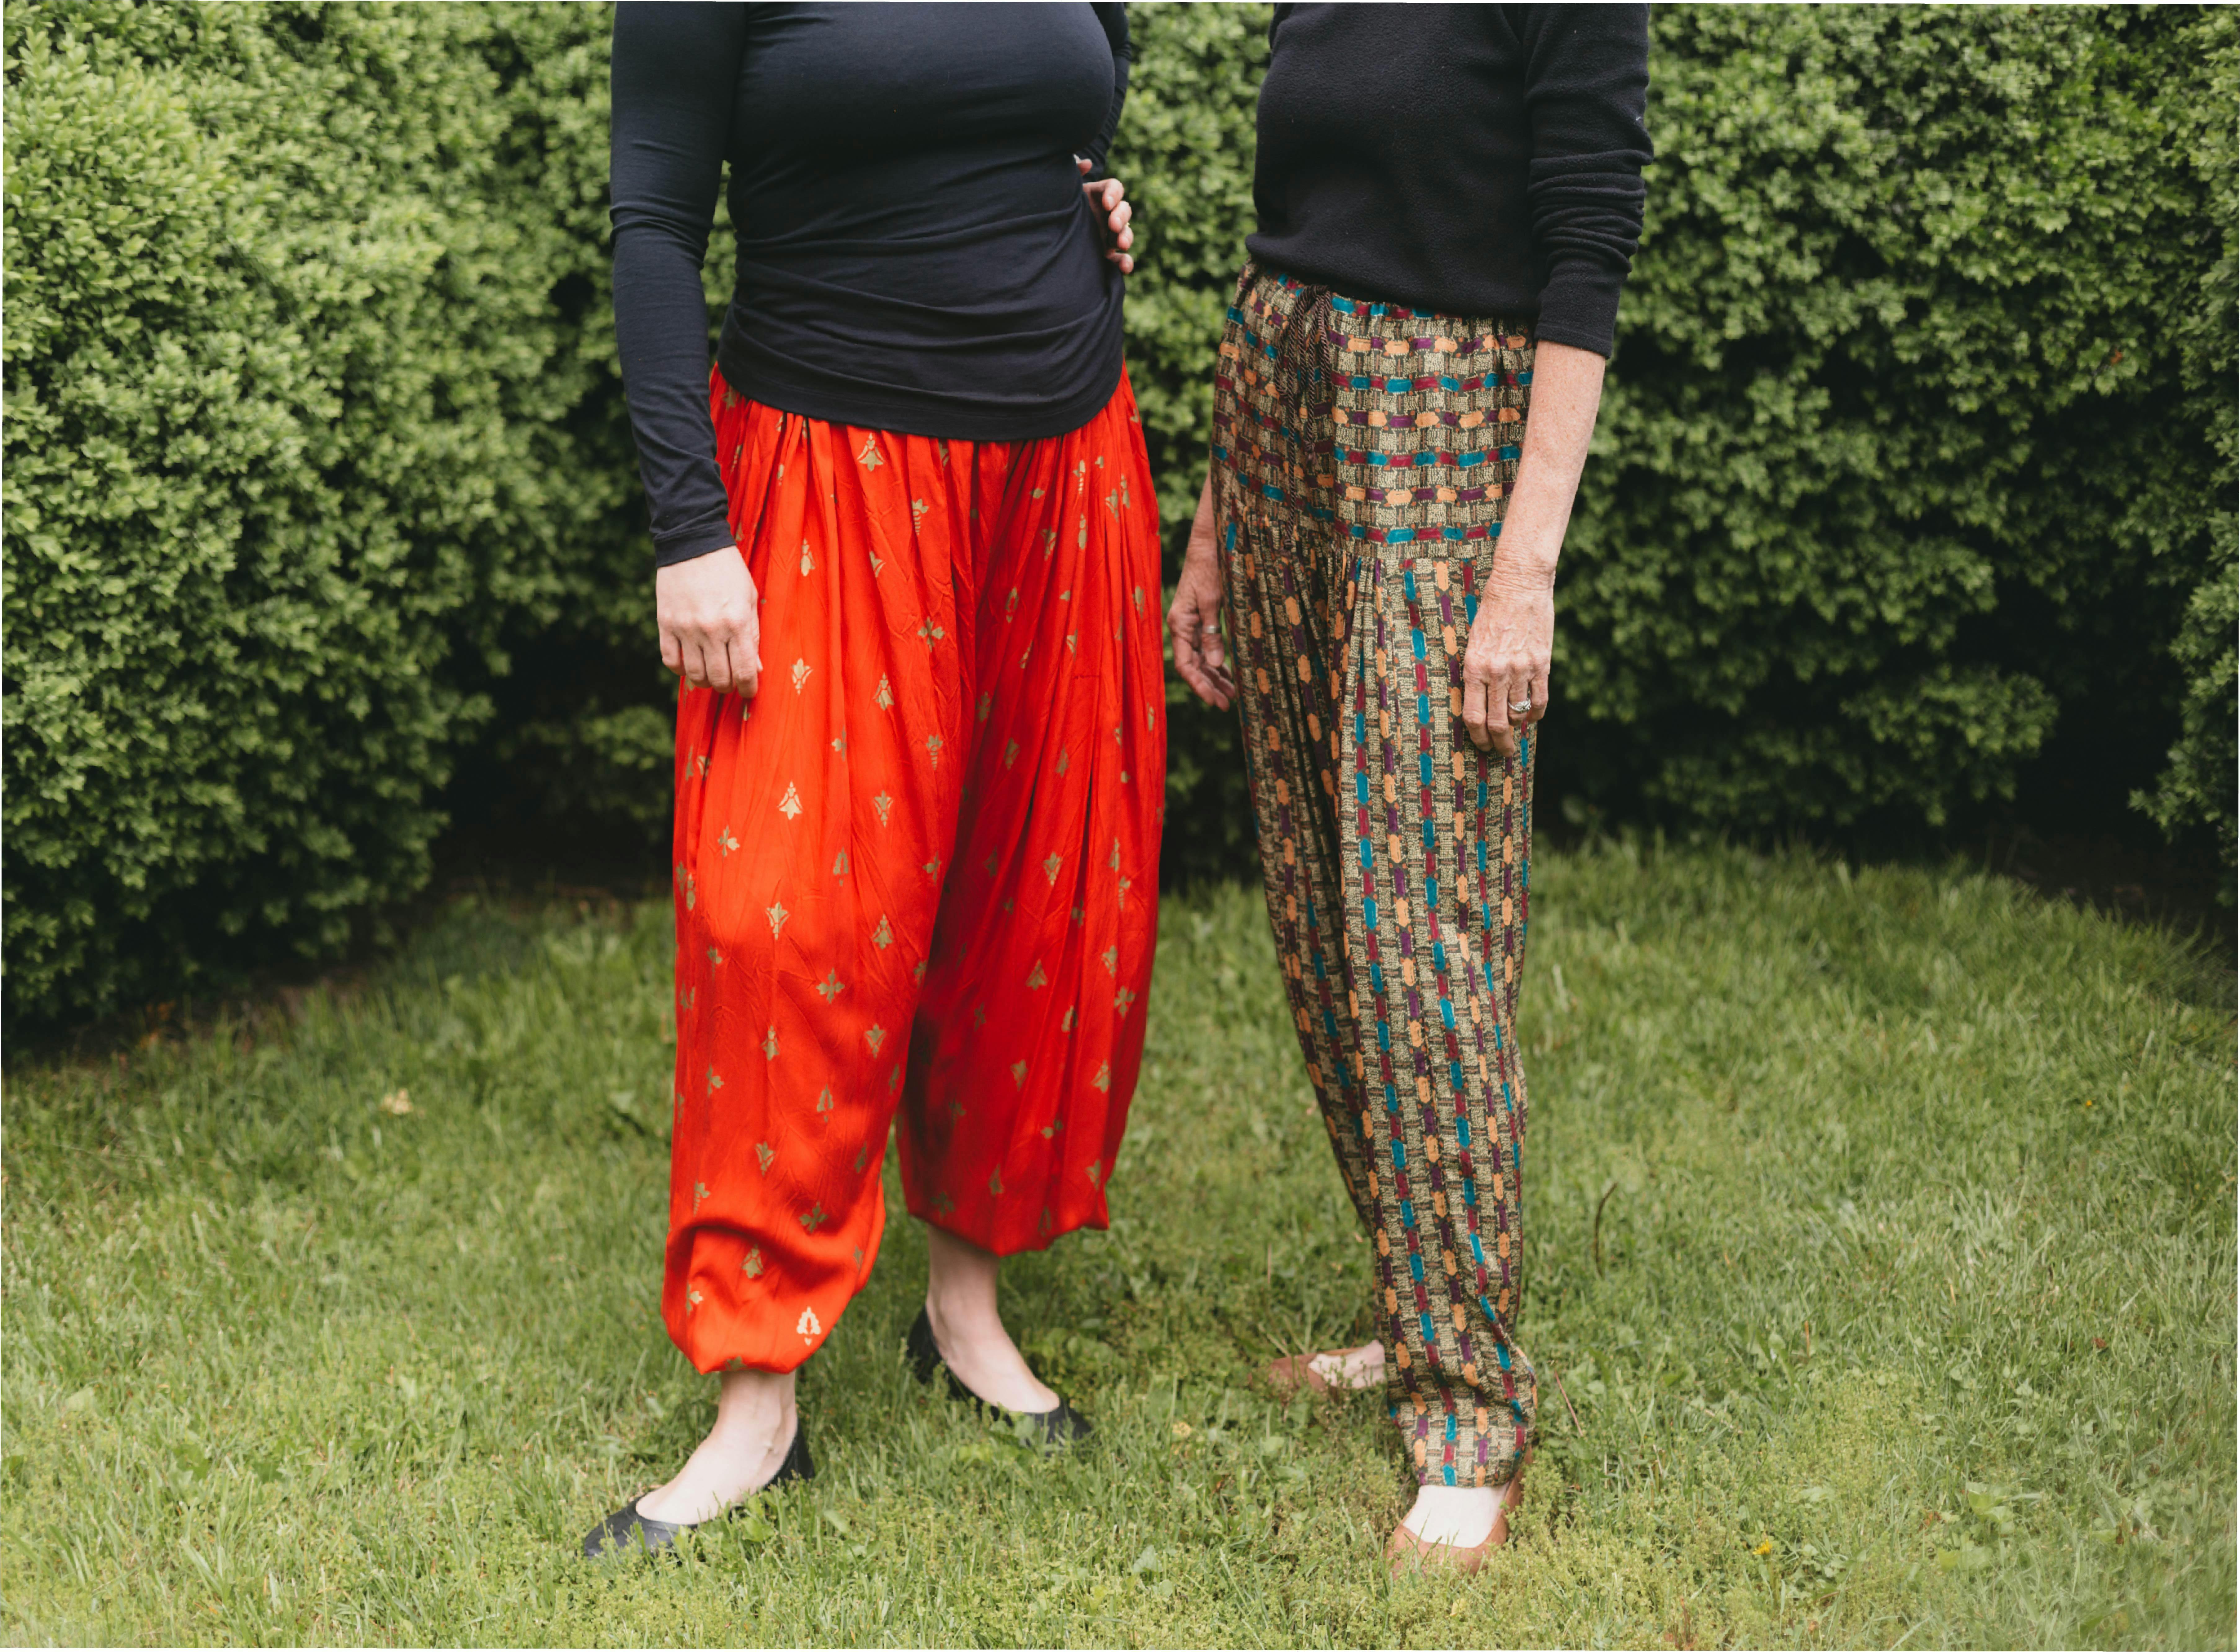 Folkwear 119 Sarouelles (pants) Workshop - sewing and embellishing